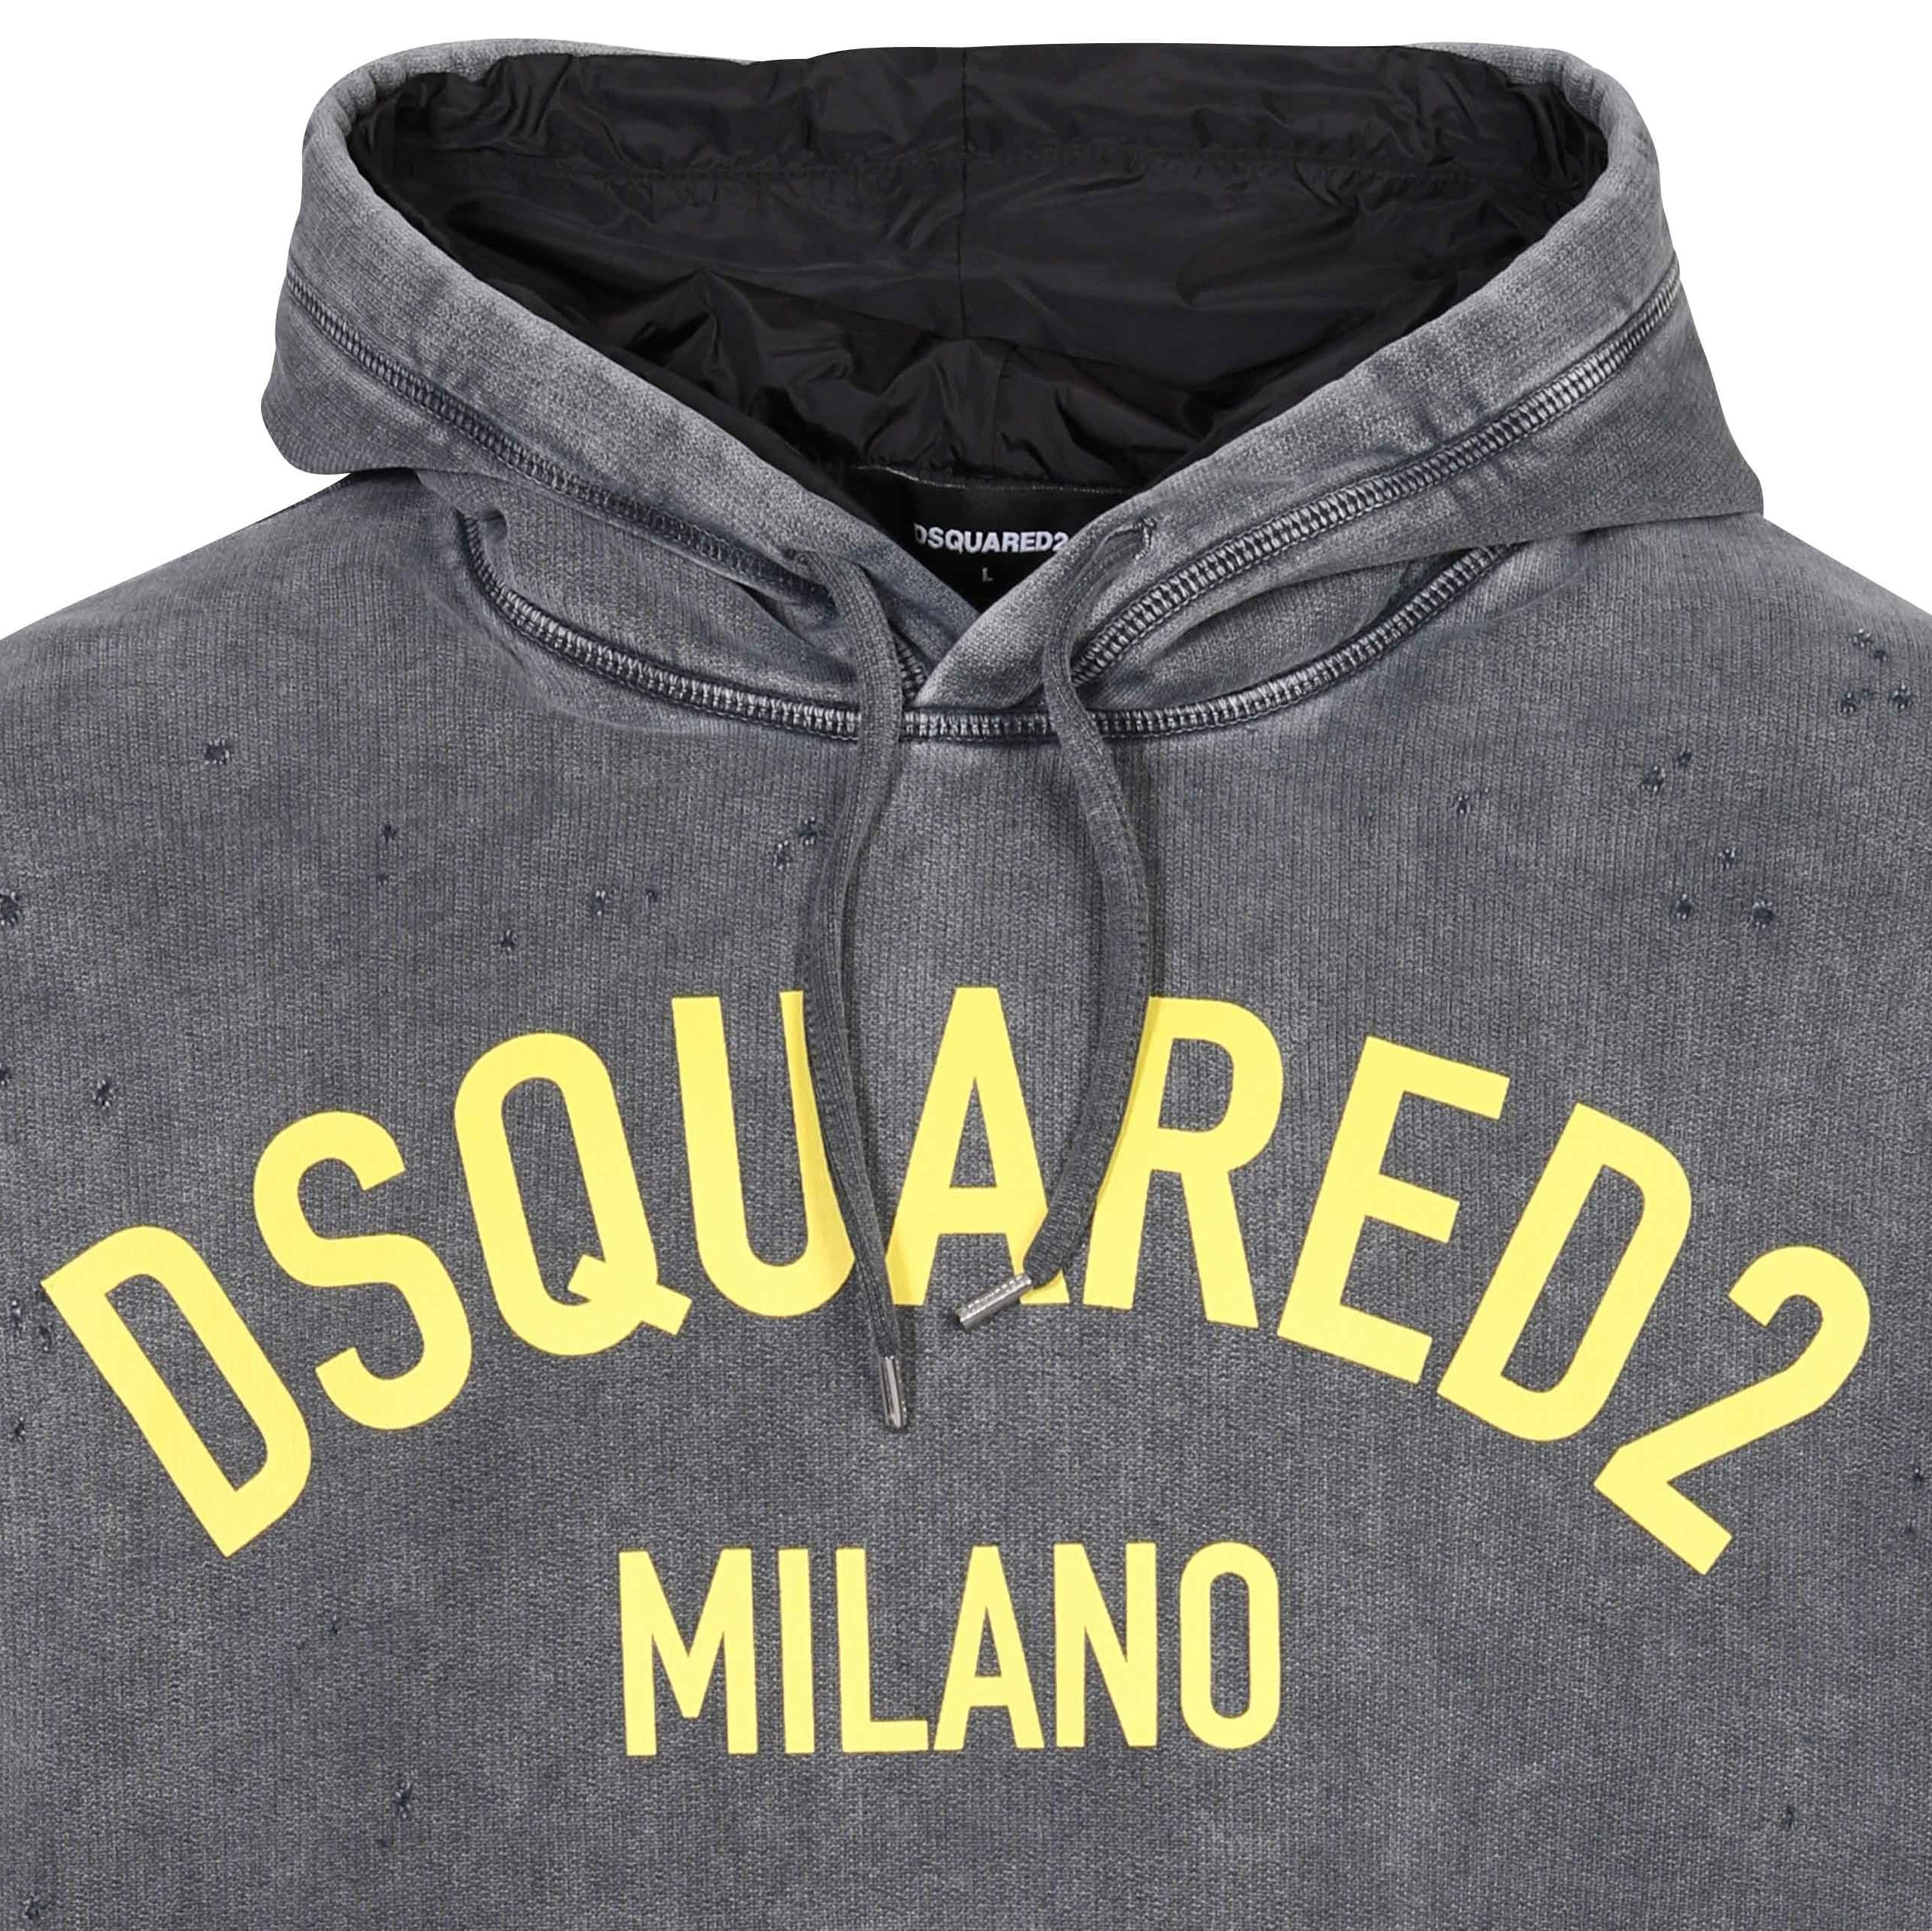 Dsquared D2 Milano Hoodie in Vintage Grey